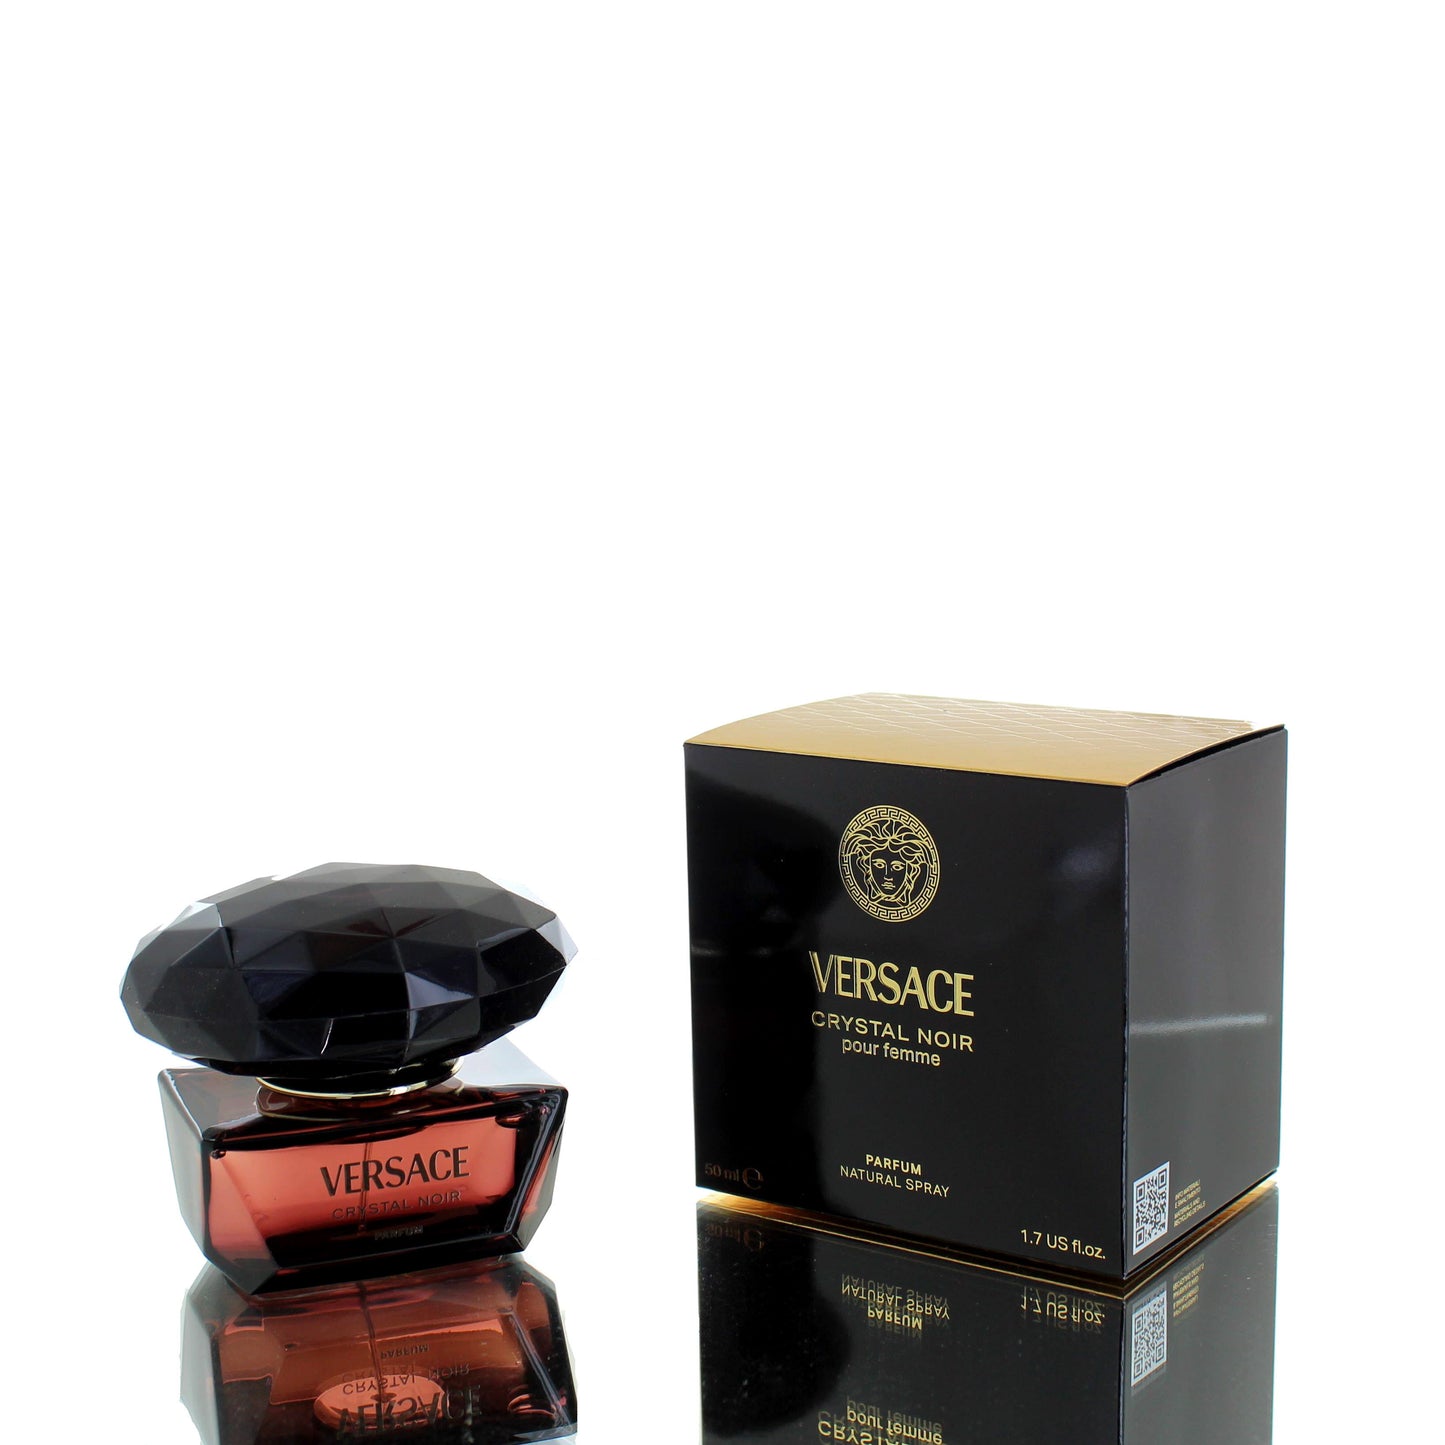 Versace Crystal Noir Parfum Edition